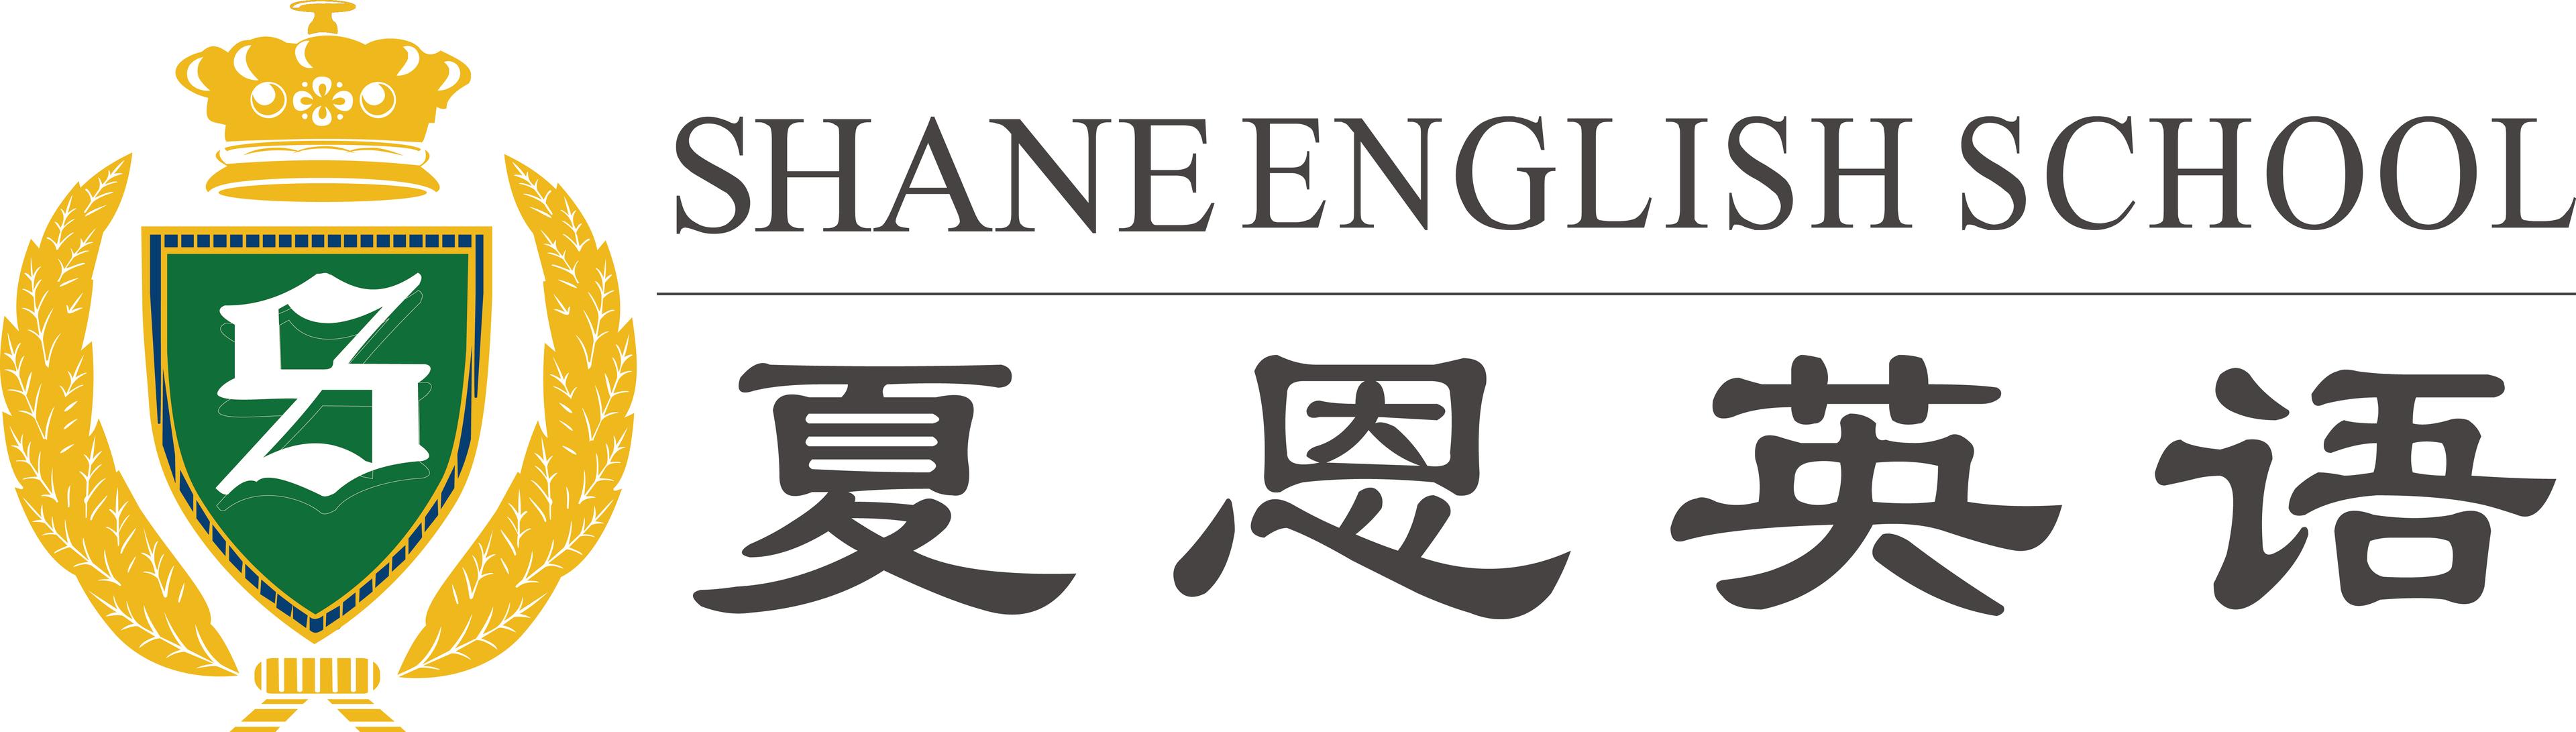 Shane English Schools Changzhou image